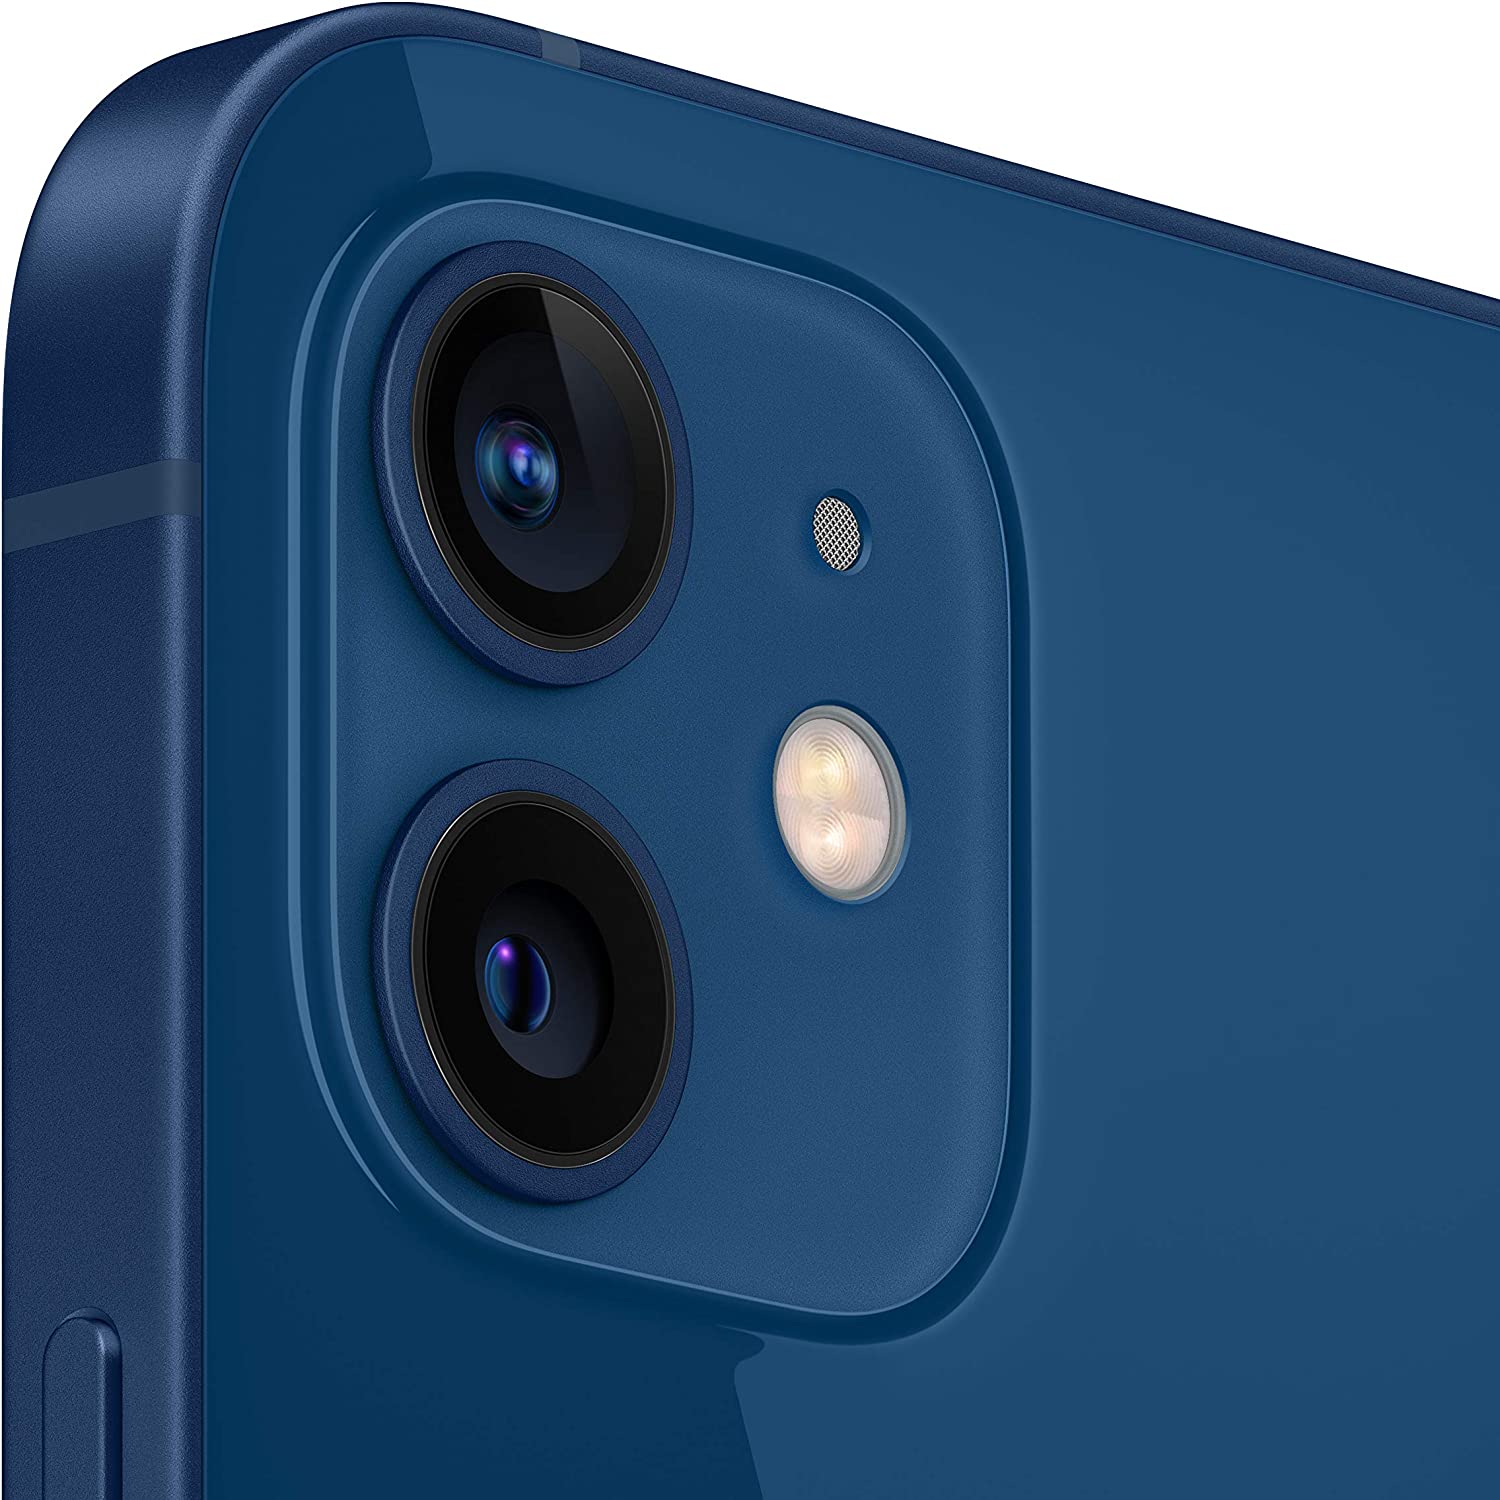 Apple iPhone 12 64GB Azul